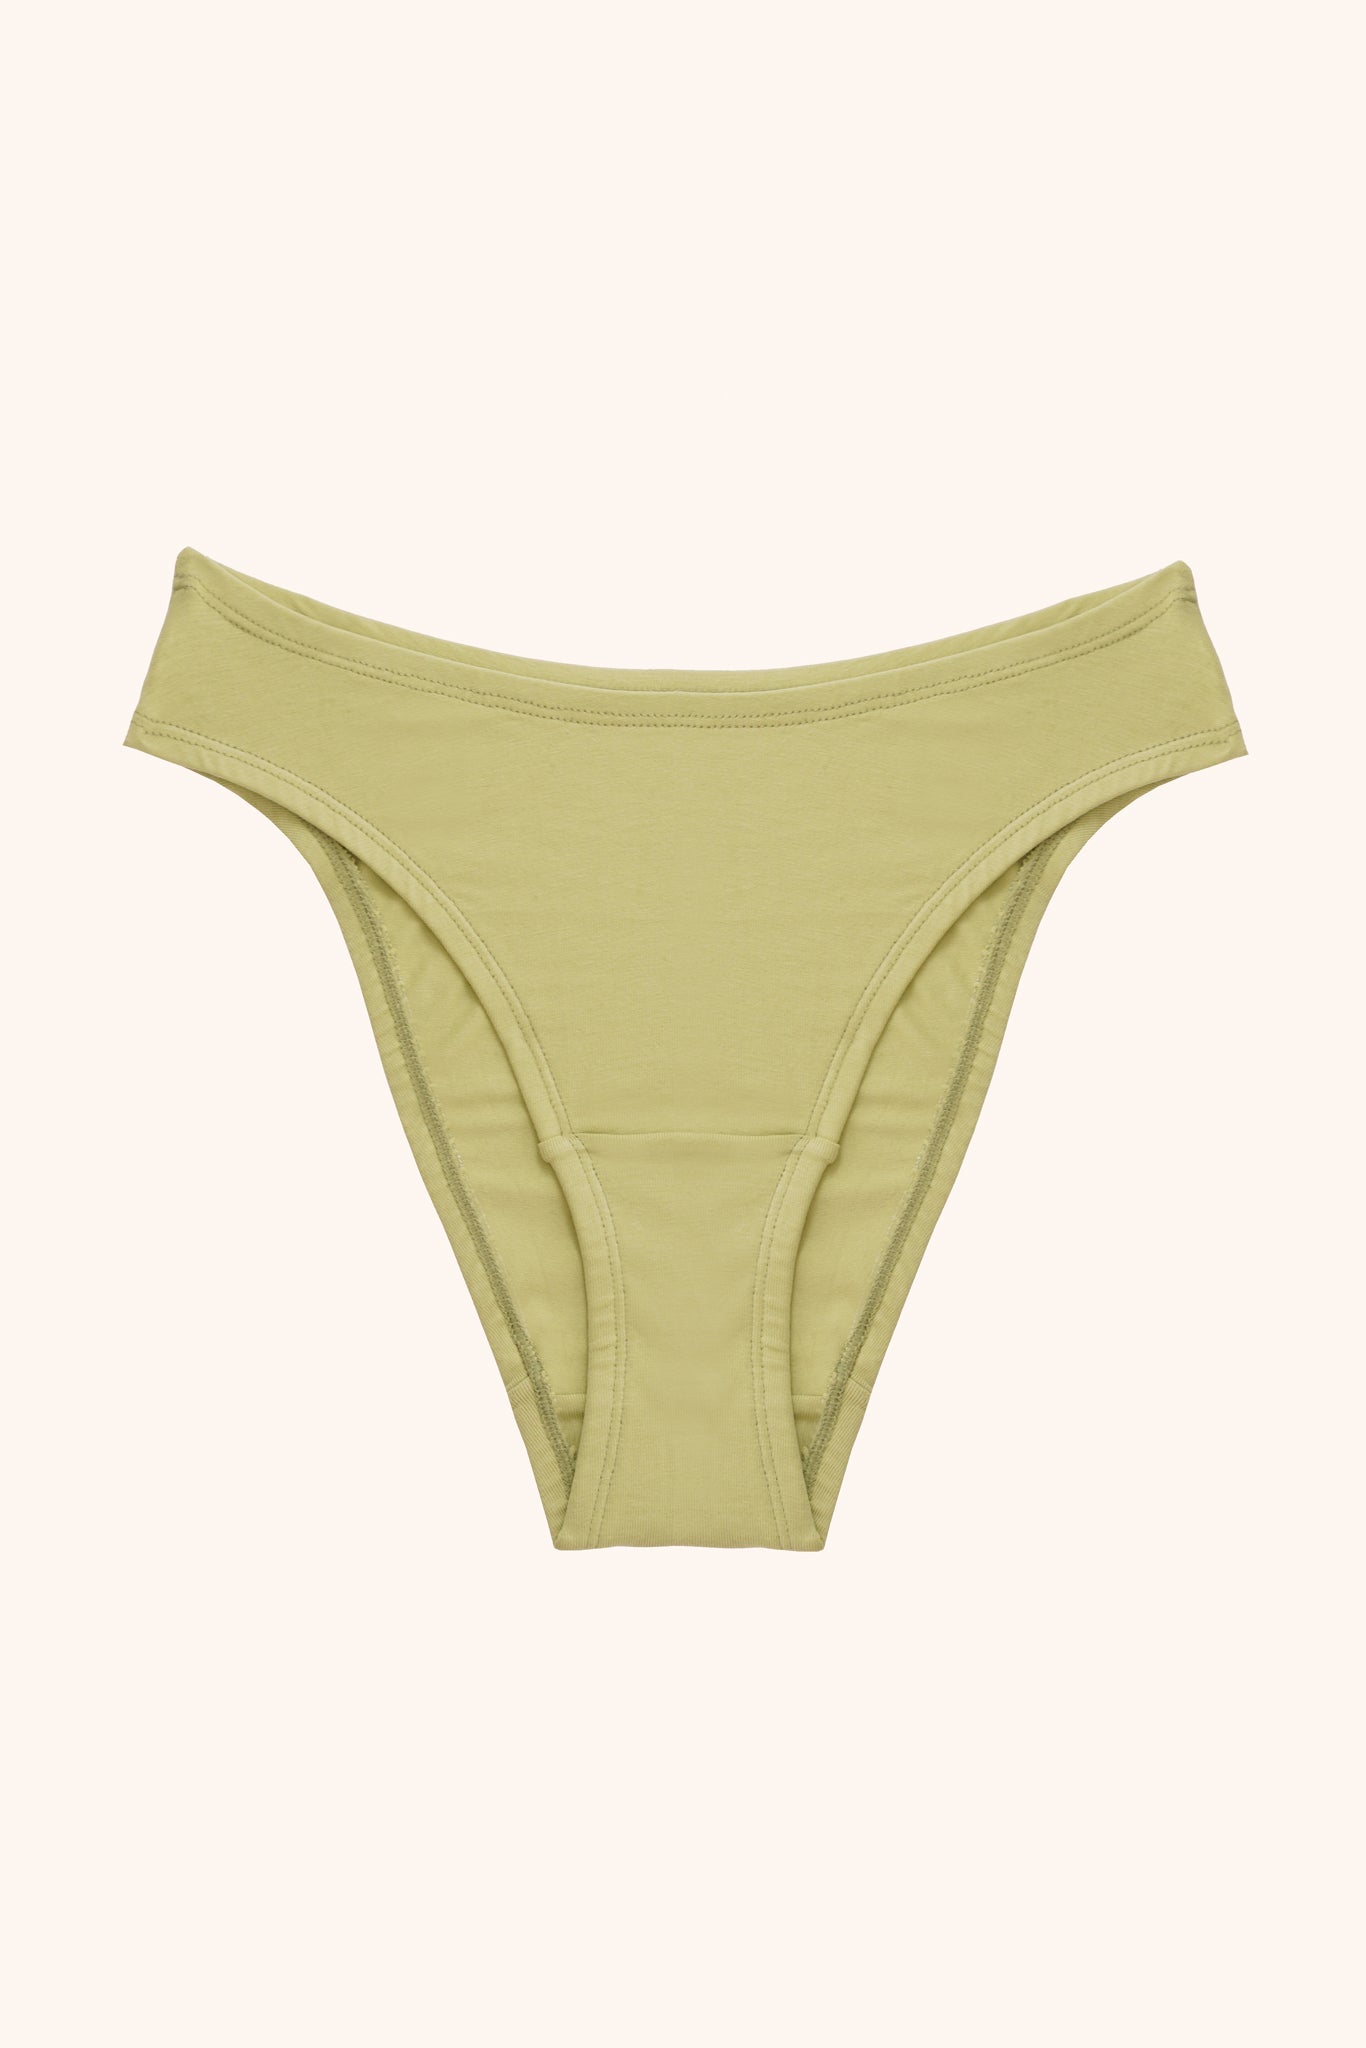 meryl-cotton-high-cut-panties-pistachio.jpg